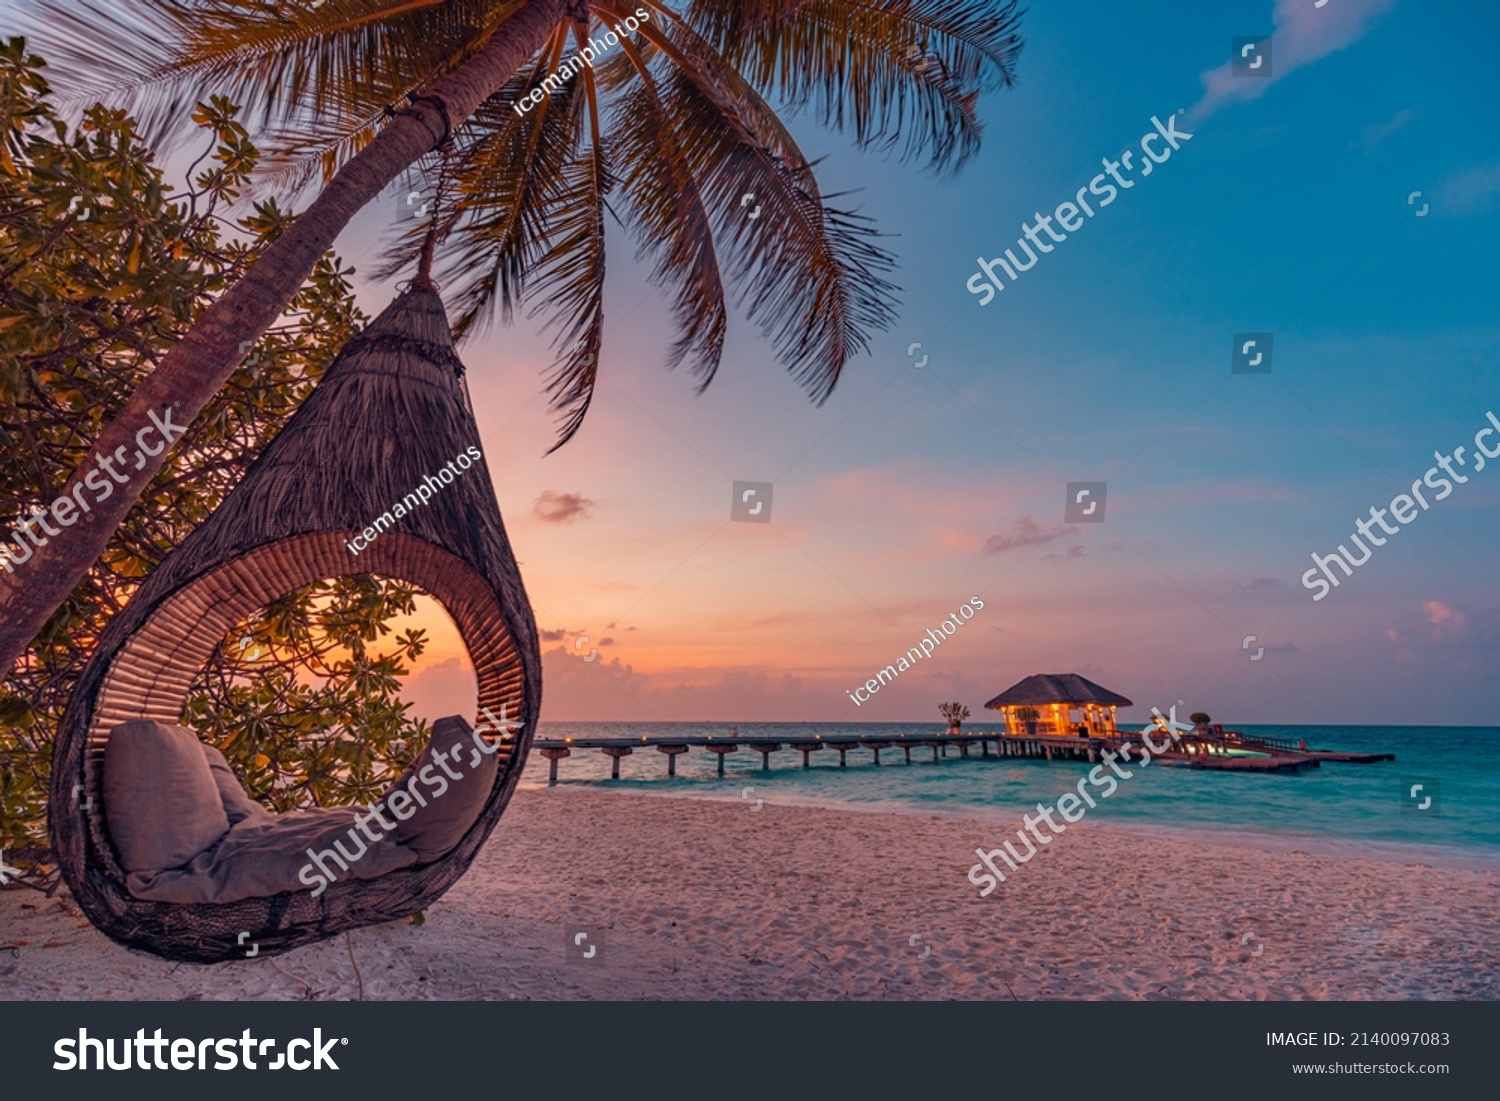 Tropical sunset beach background, summer island landscape with beach swing or hammock and sand romantic sea beach. Beautiful beach scene vacation or summer holiday concept. Honeymoon, romance resort #2140097083